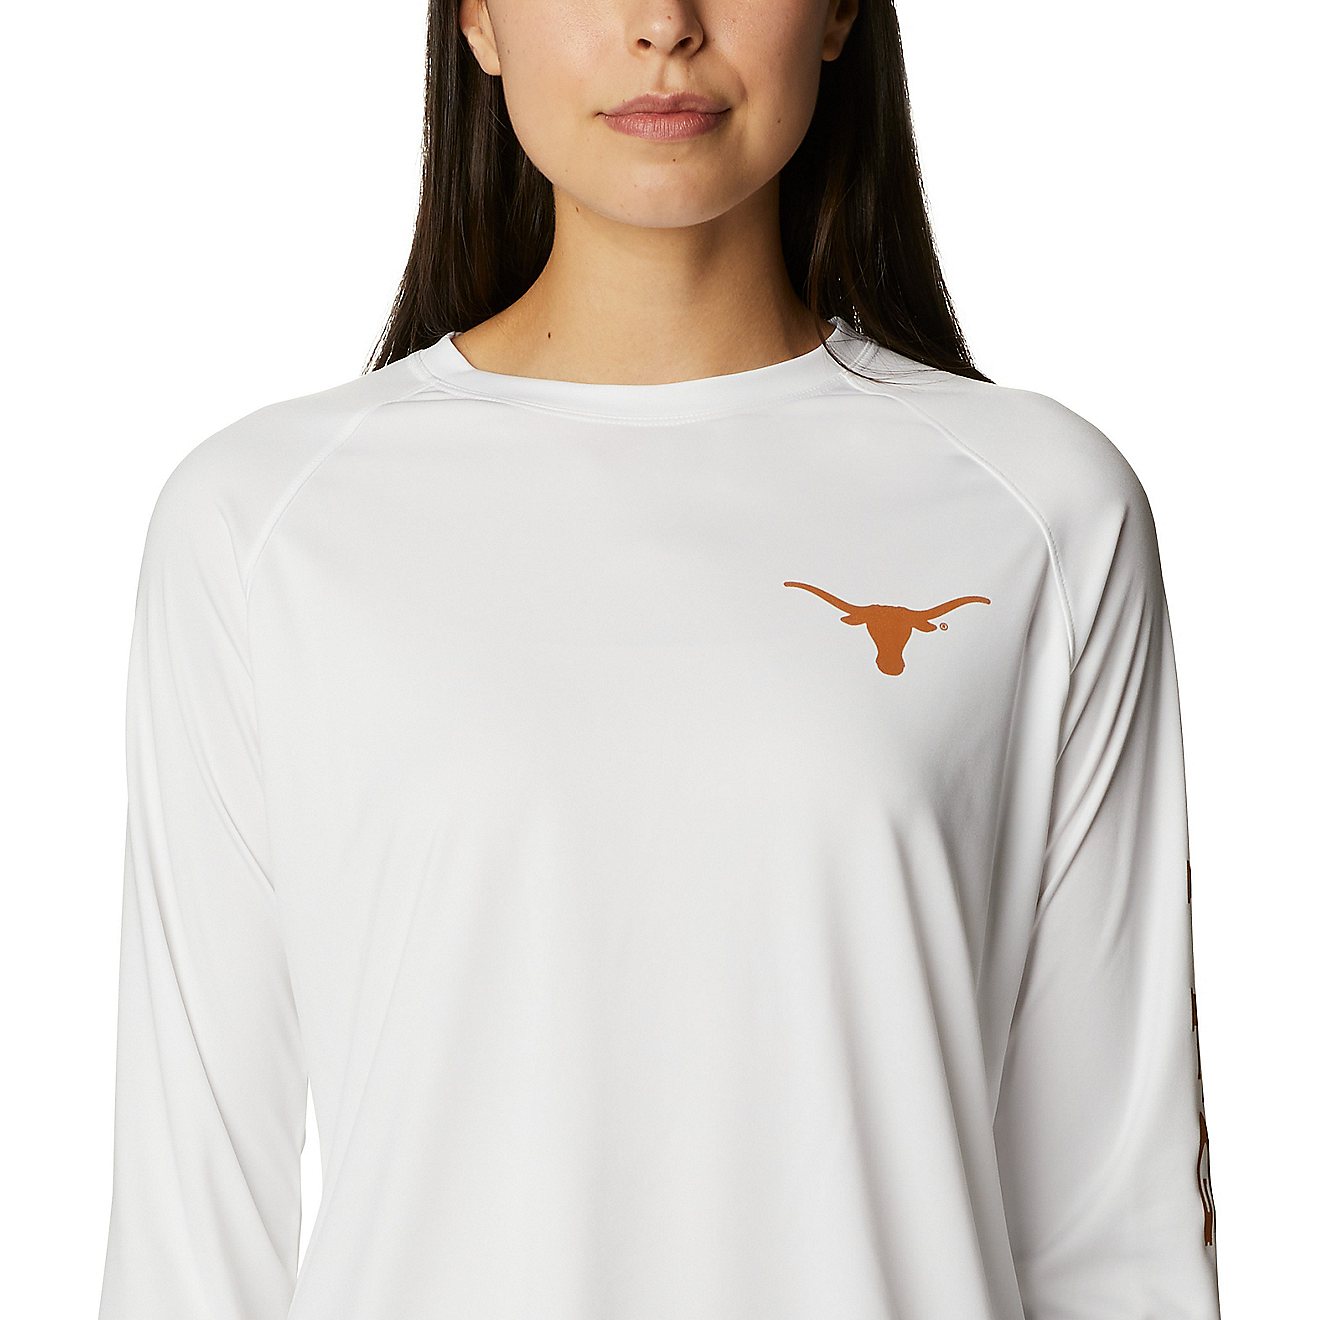 Columbia Sportswear Women's University of Texas Tidal Long Sleeve T-shirt                                                        - view number 4